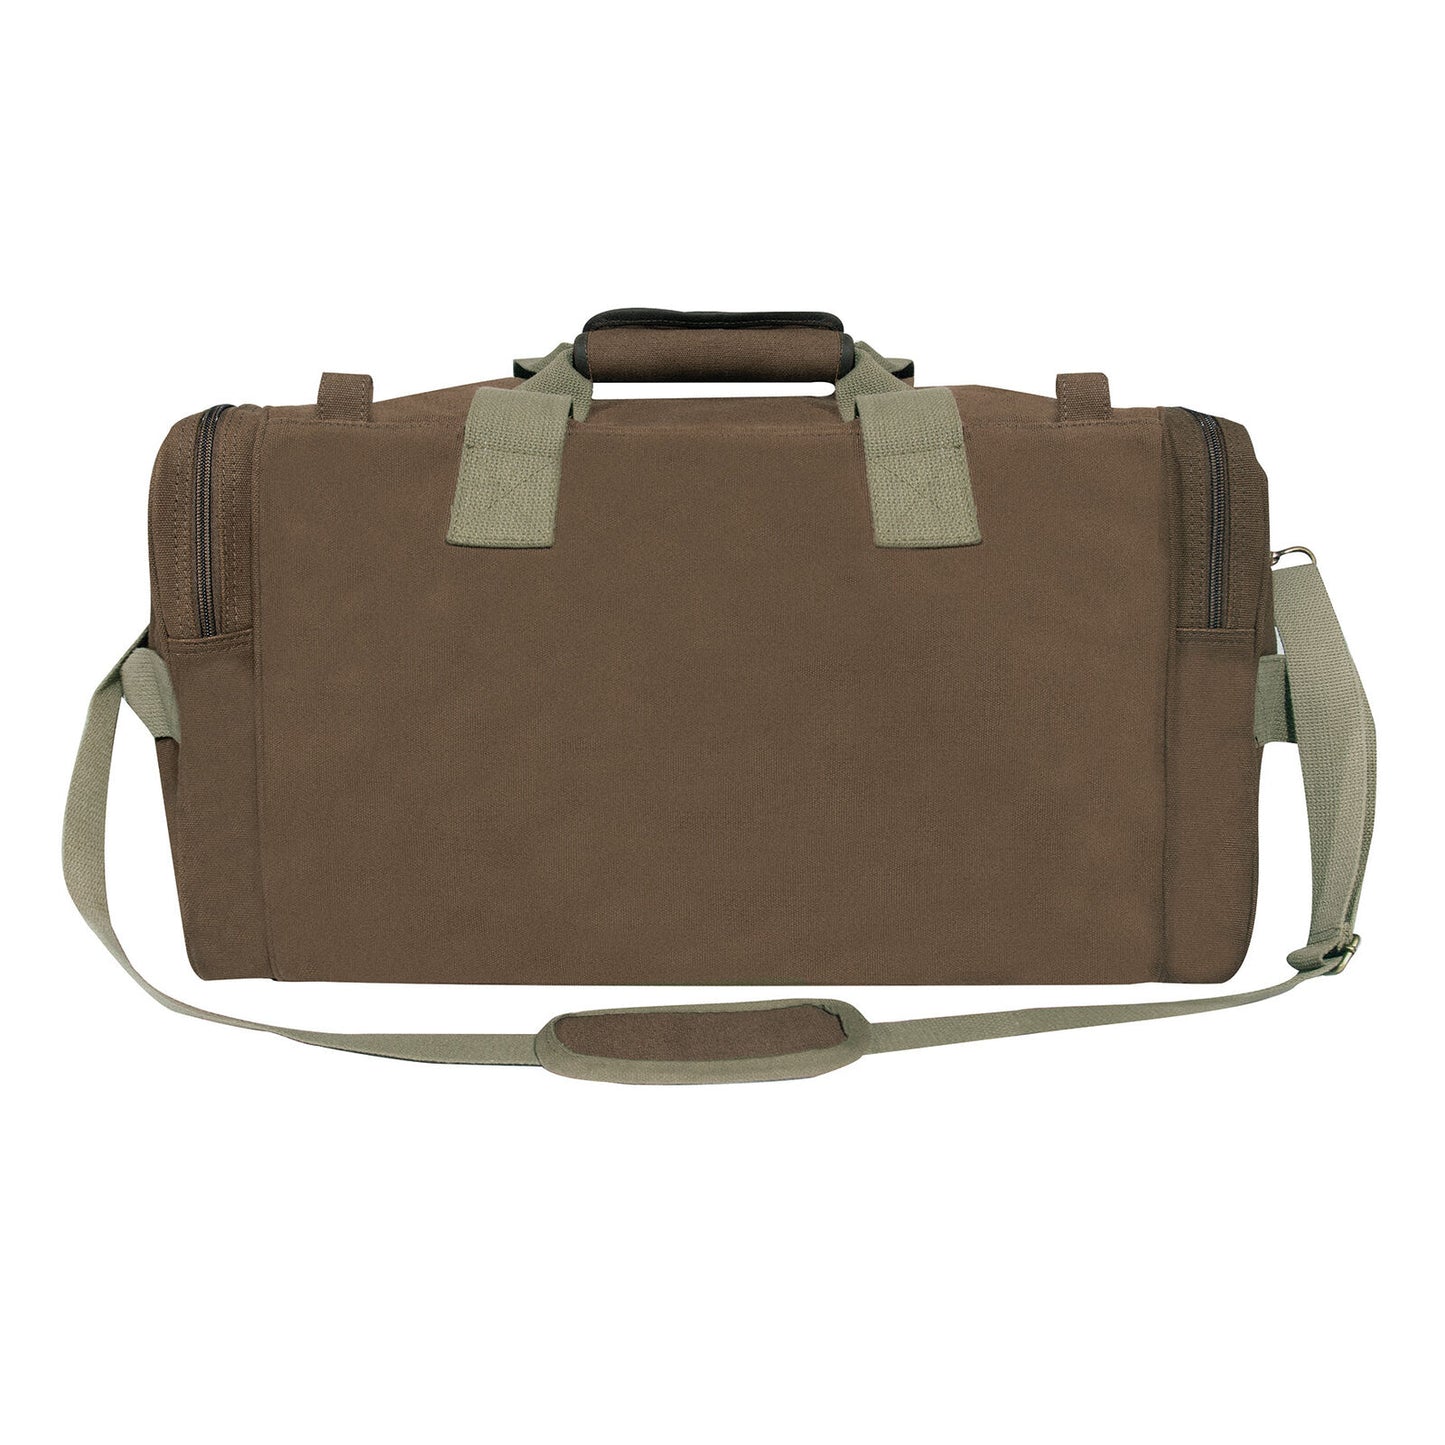 Rothco Brown Long Journey Canvas Travel Bag Shoulder Duffle Bag